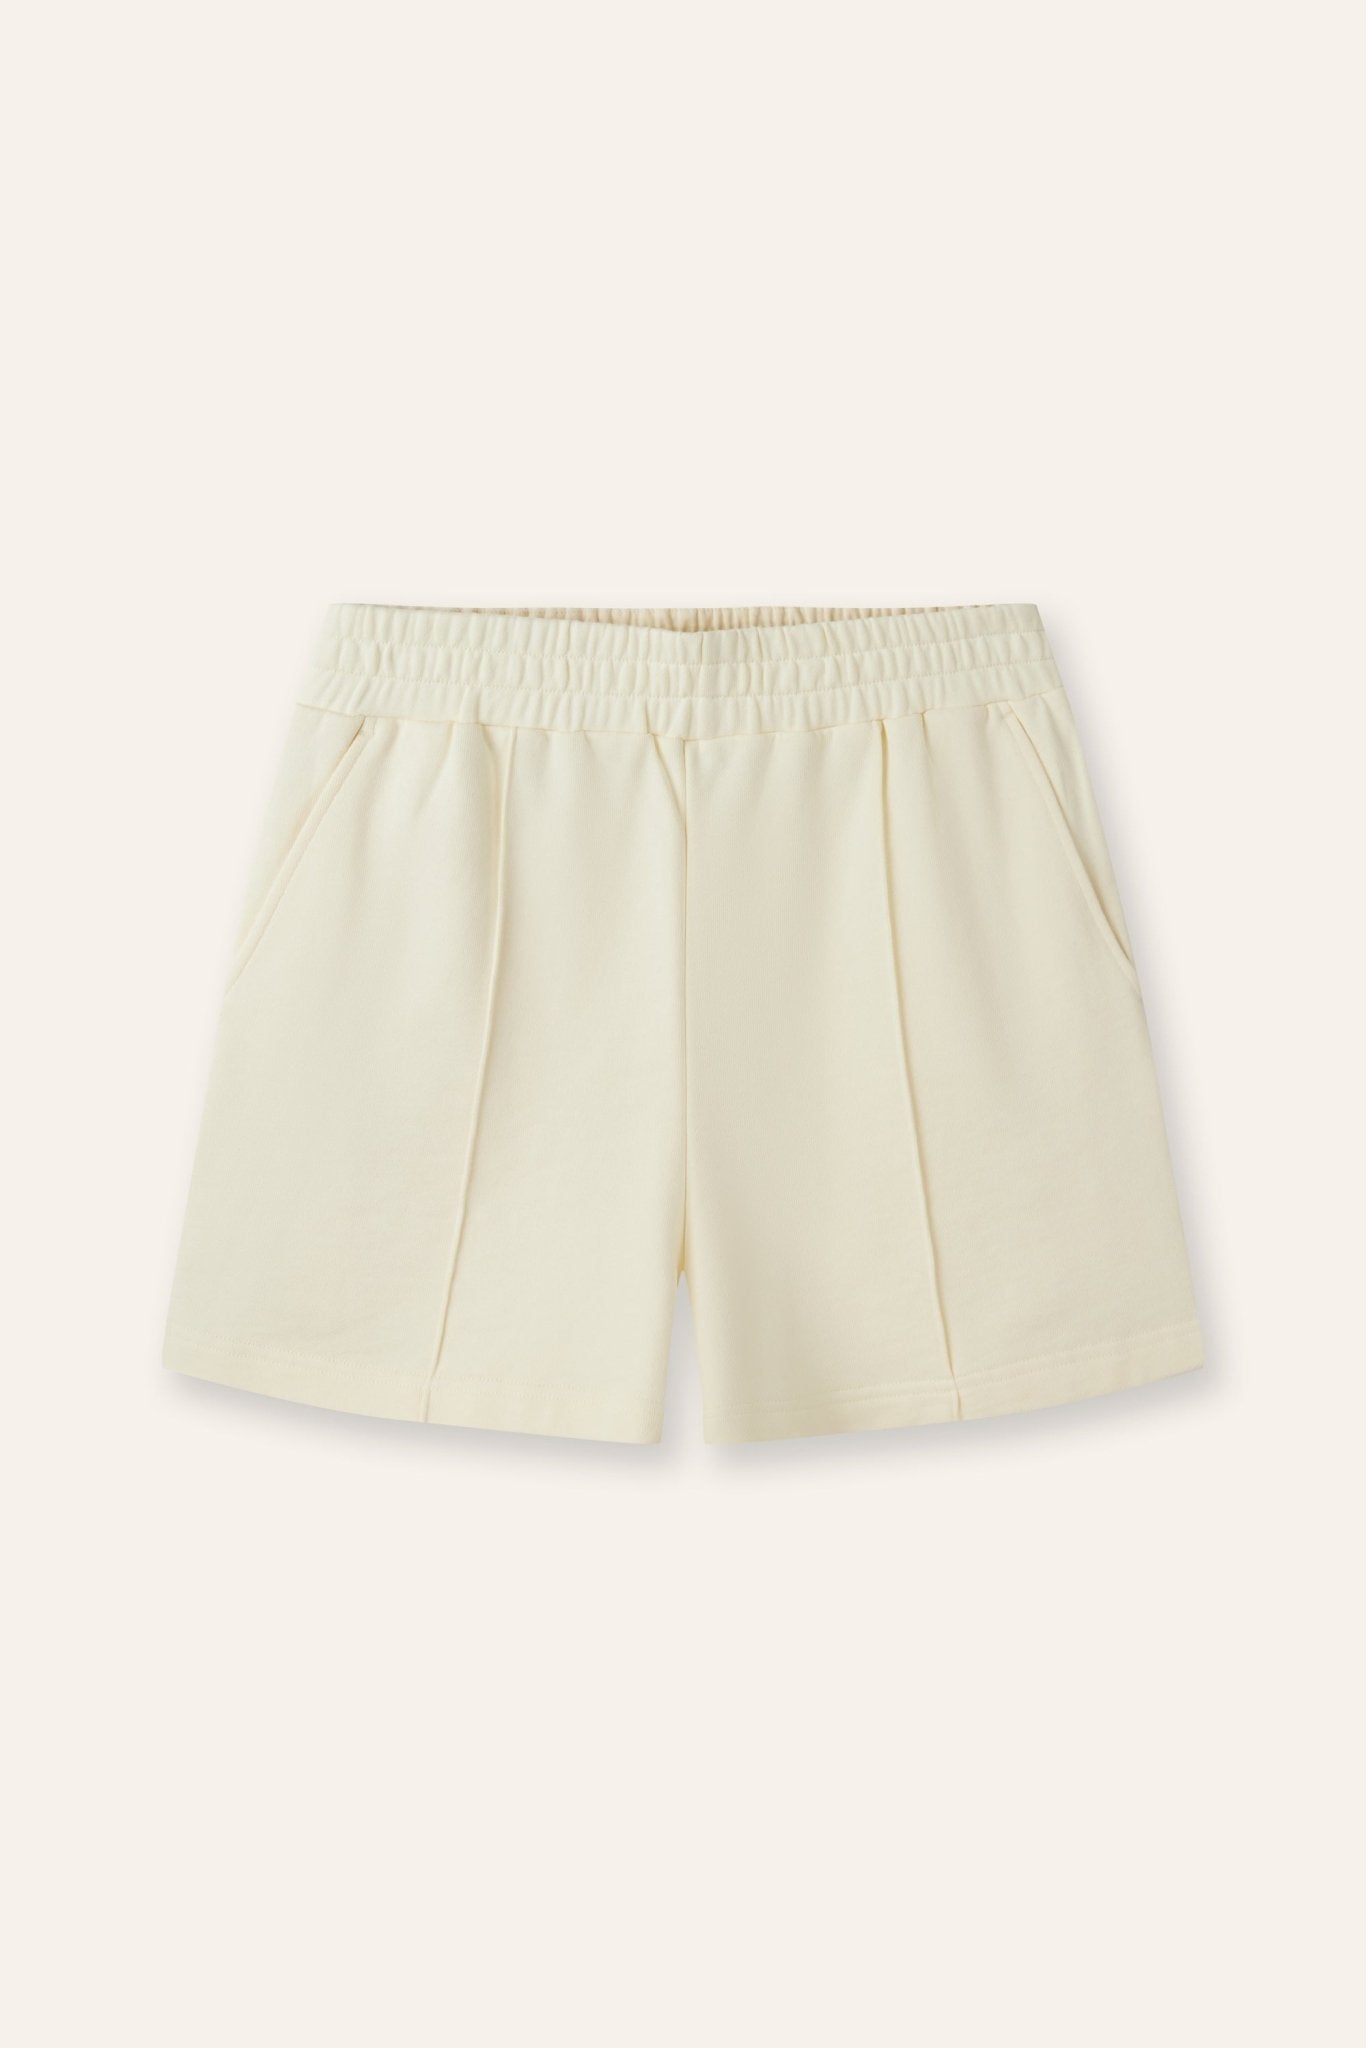 VENICE cotton shorts (Light yellow) - STELLAM